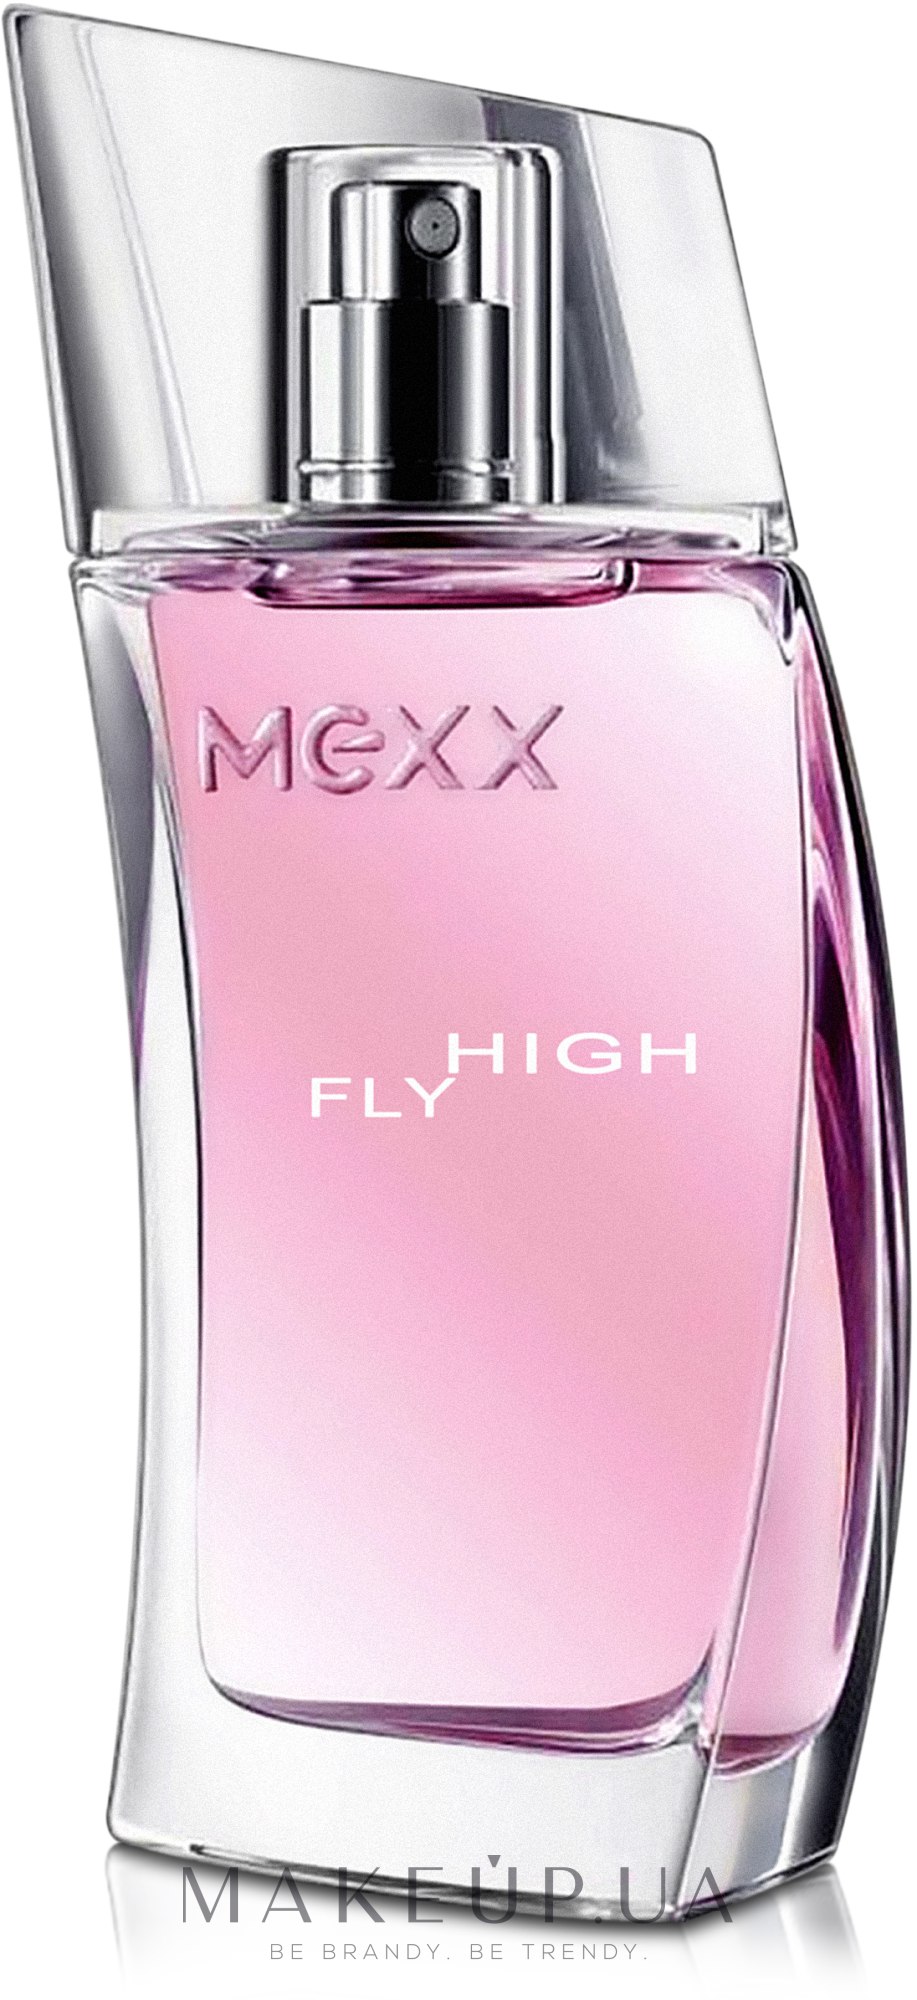 Mexx Fly High